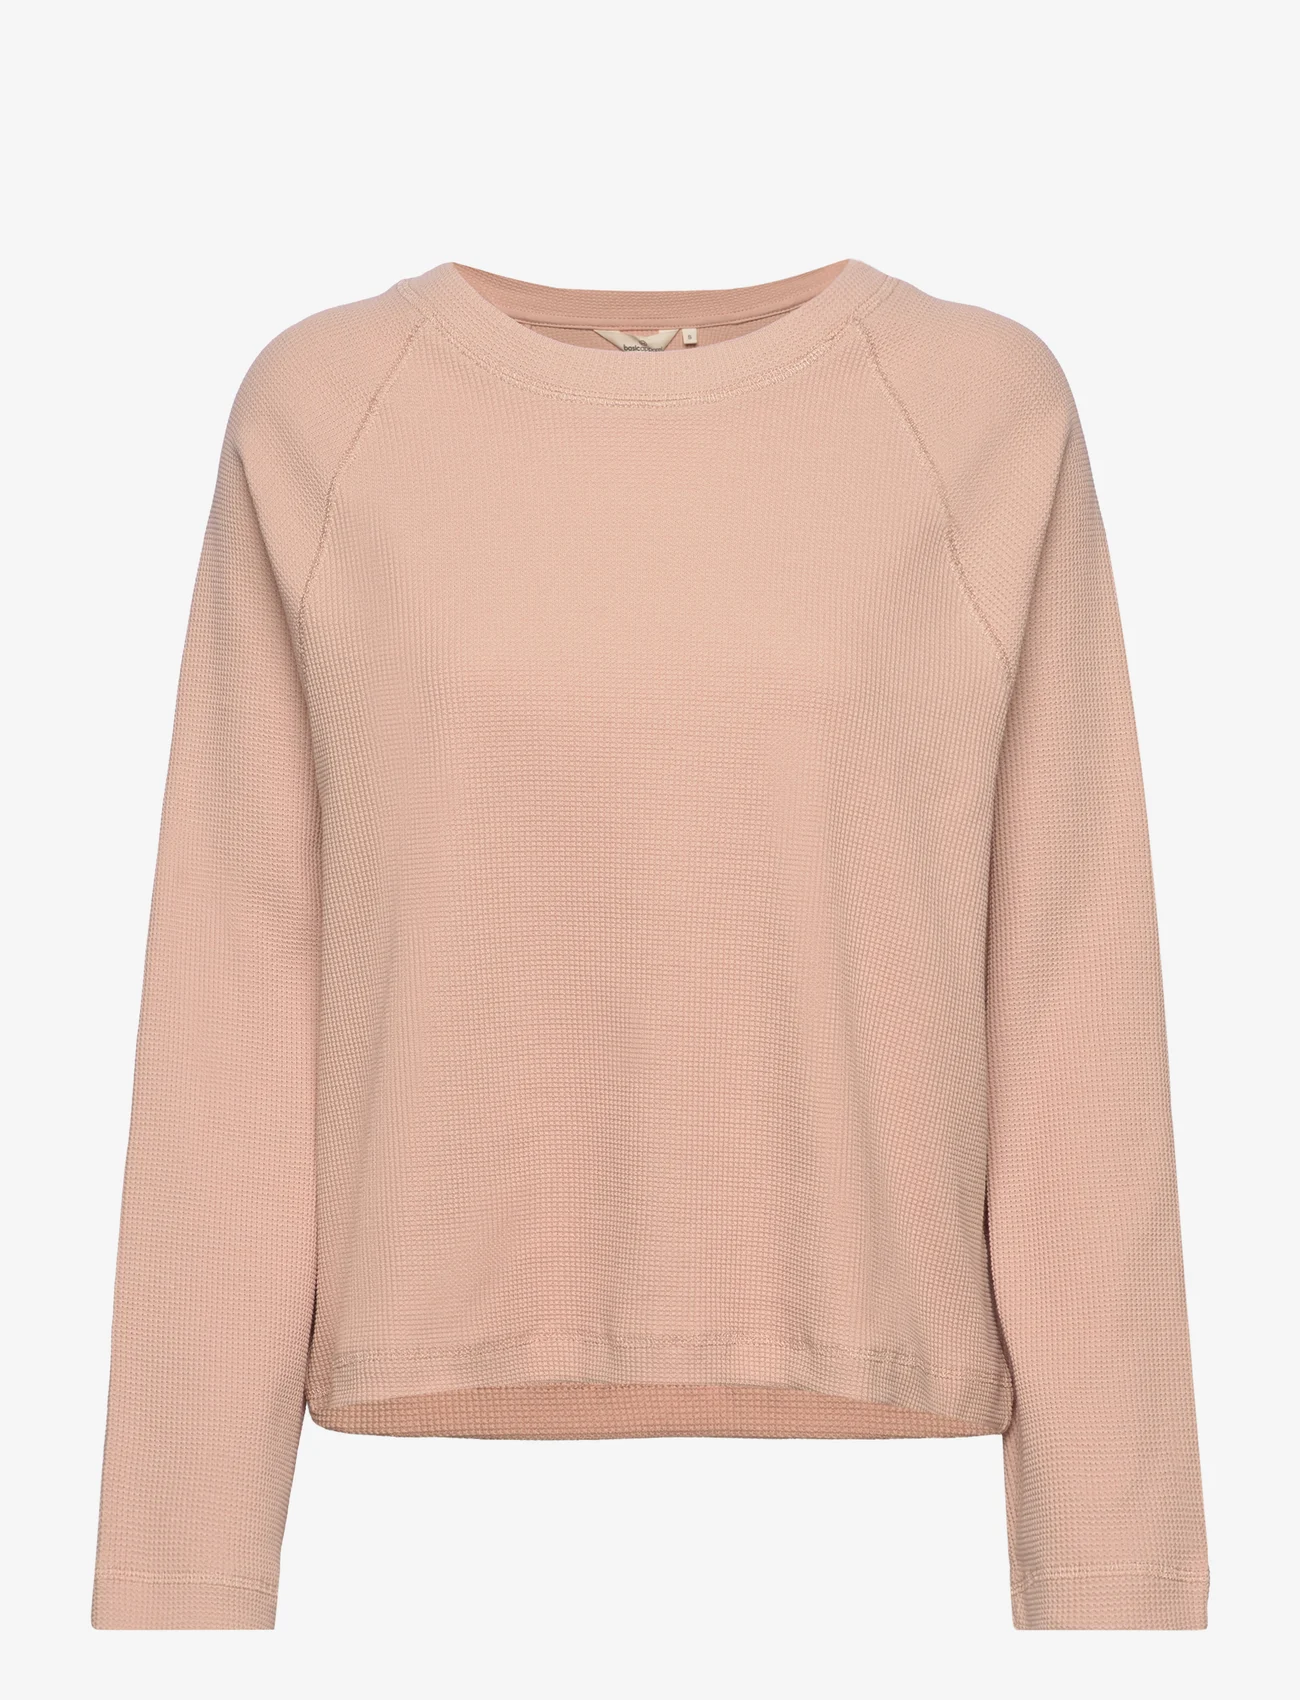 Basic Apparel - Barbara Sweatshirt GOTS - sweatshirts & hoodies - rose dust - 0